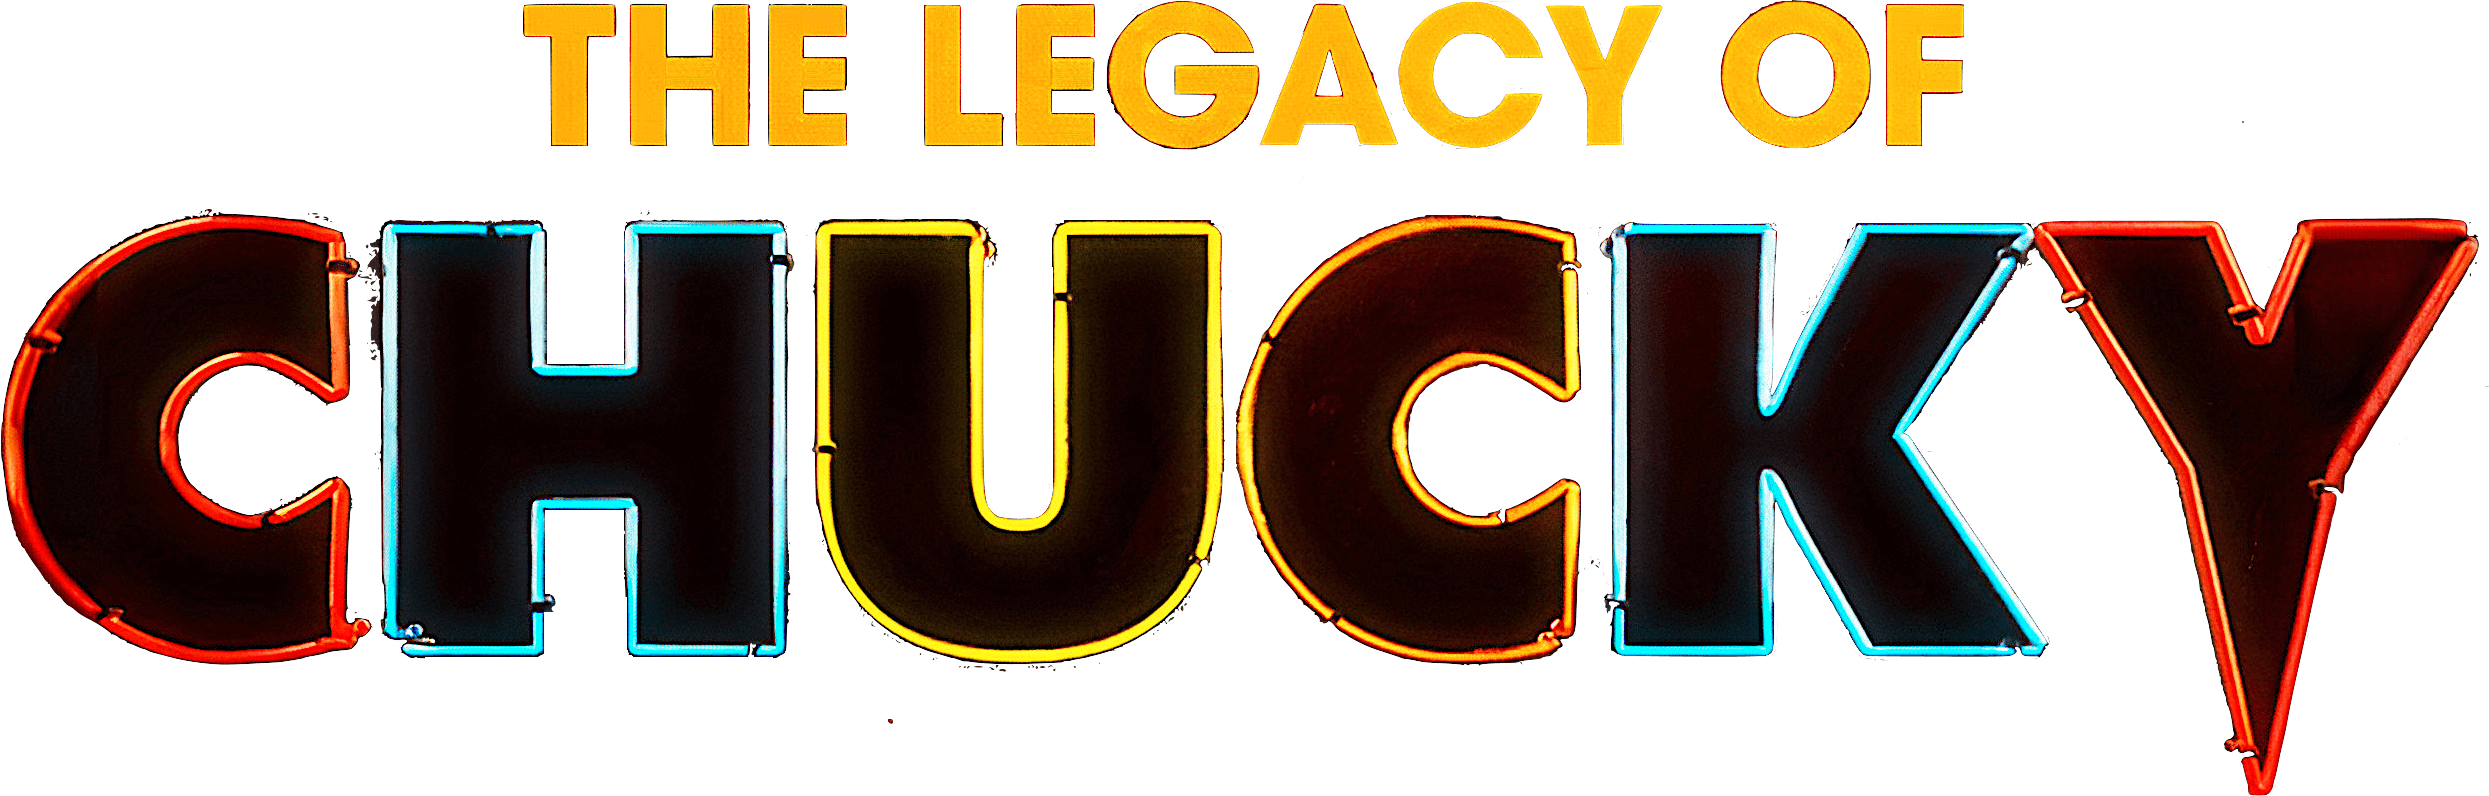 The Legacy of Chucky logo